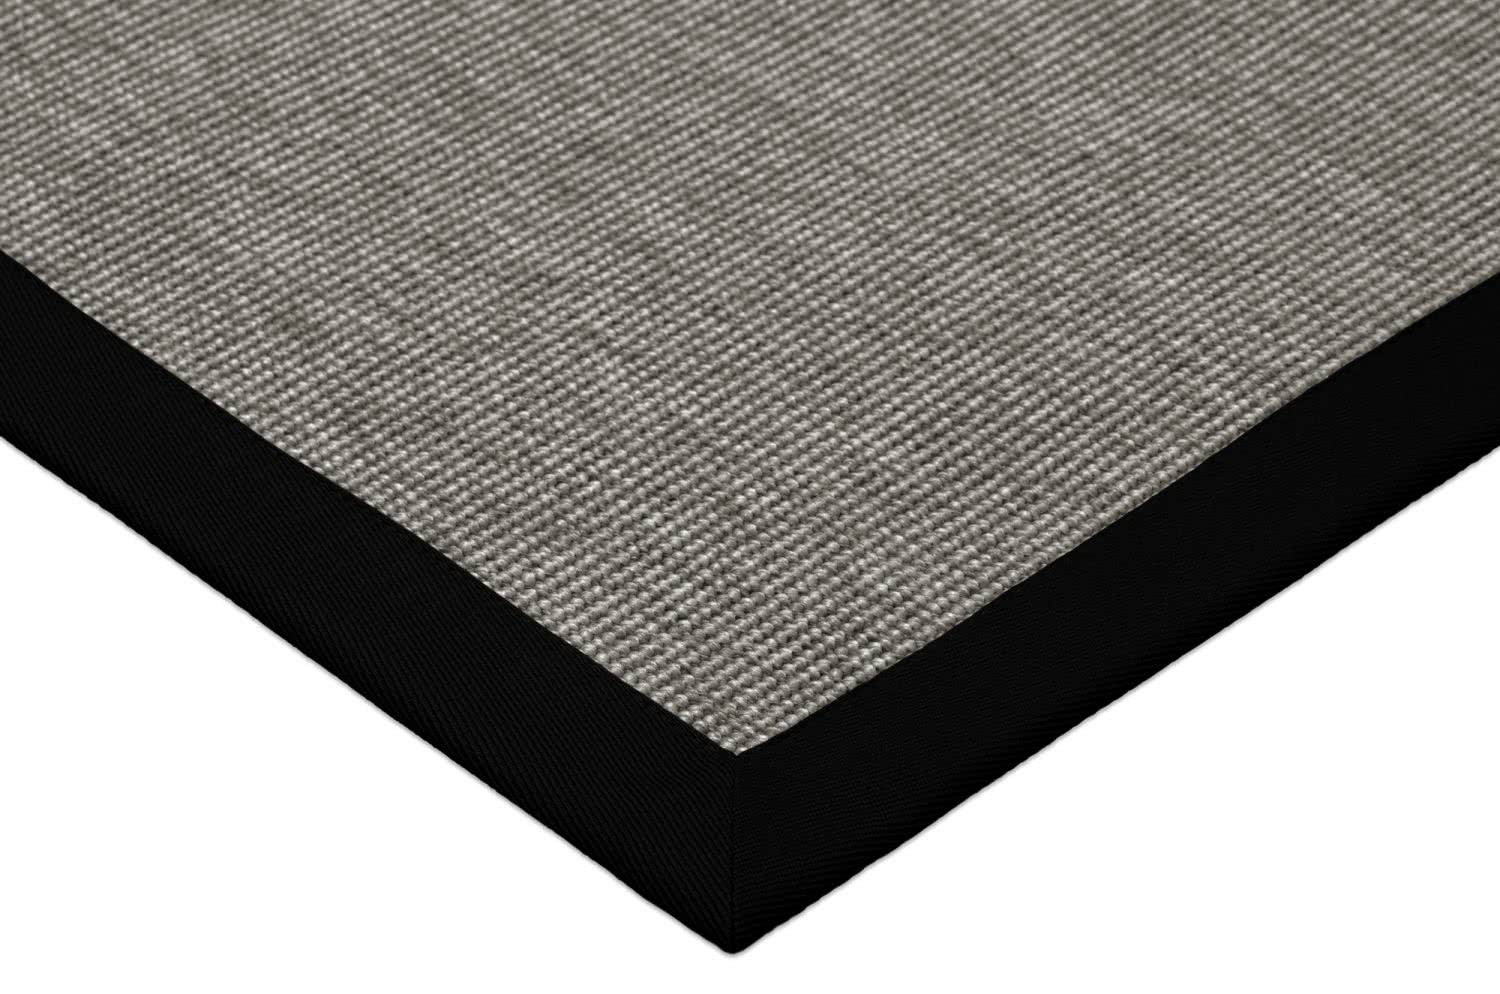 Outdoor Teppich Taffino Rips grau schwarz Bordüre